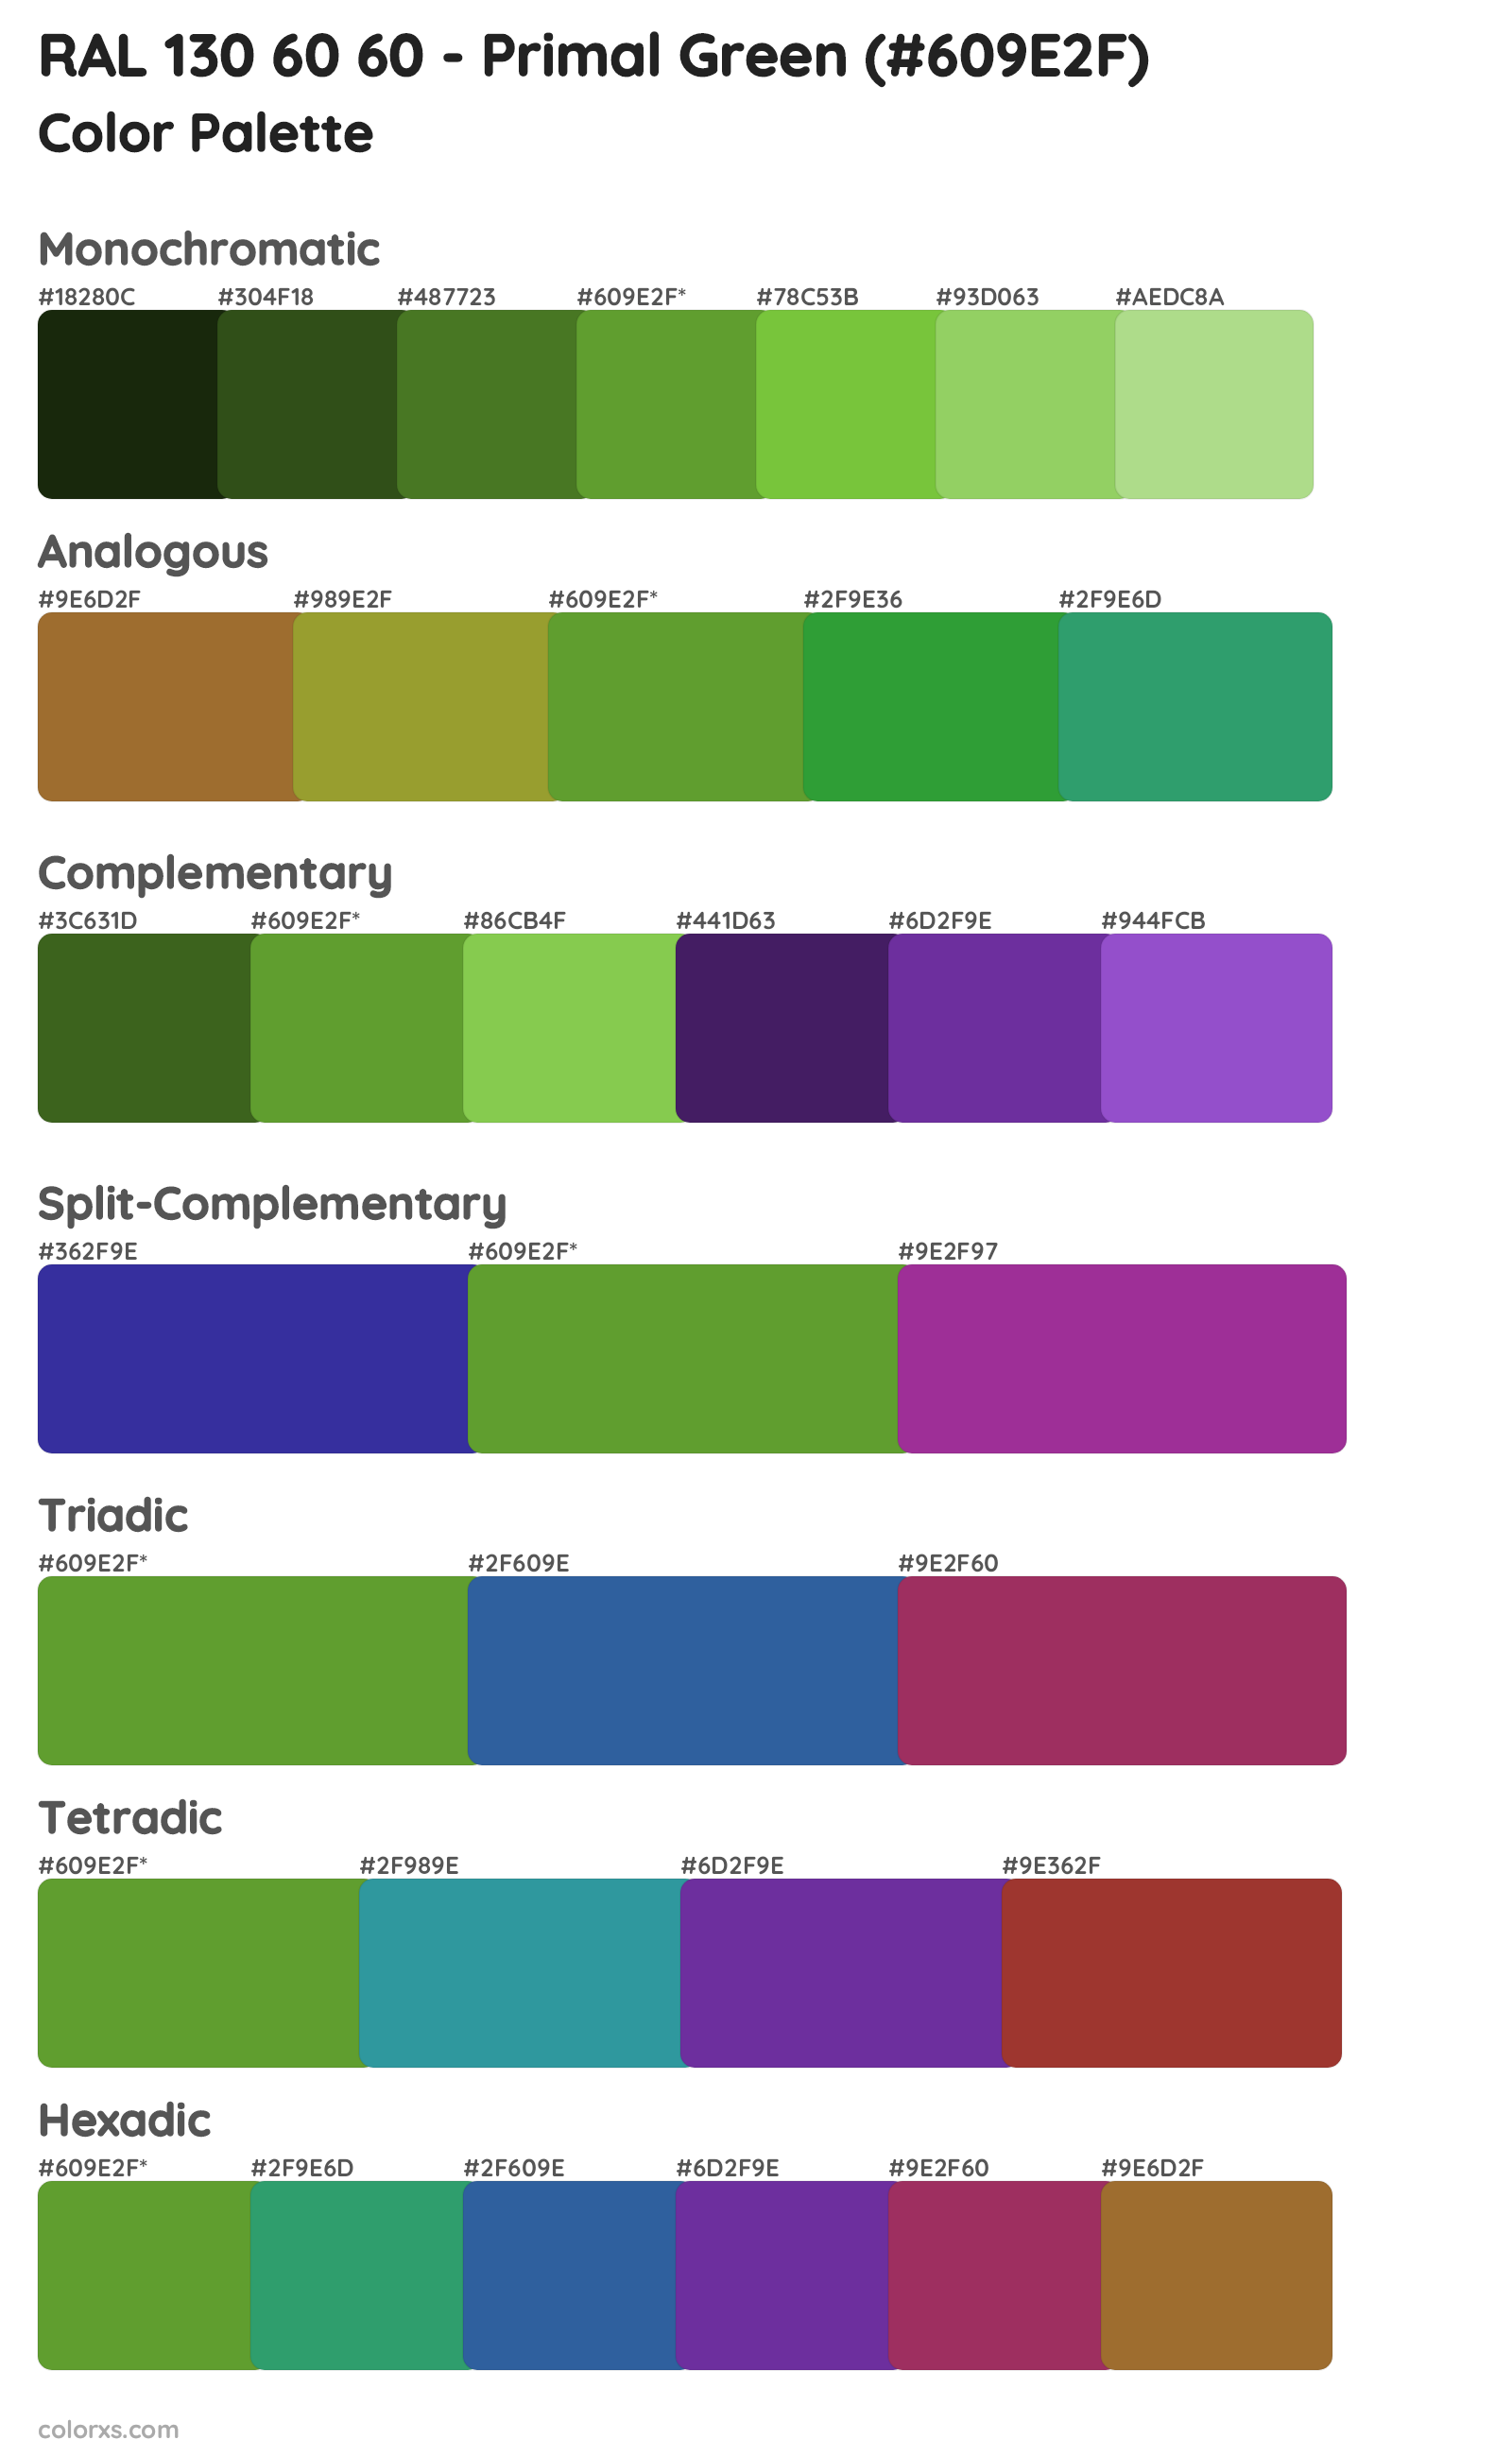 RAL 130 60 60 - Primal Green Color Scheme Palettes